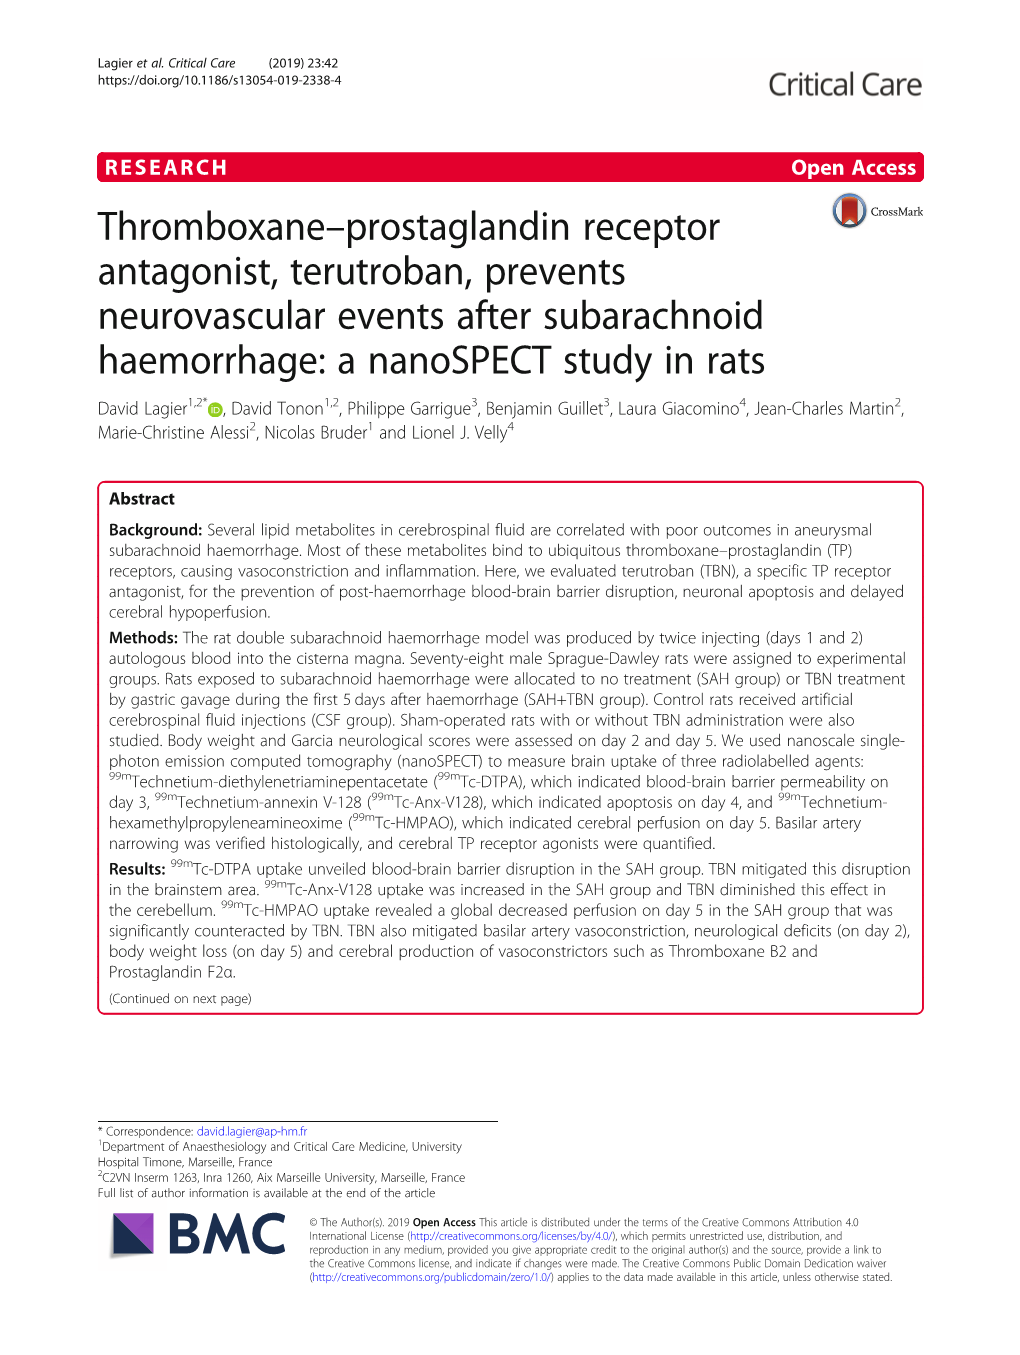 Thromboxane–Prostaglandin Receptor Antagonist, Terutroban, Prevents